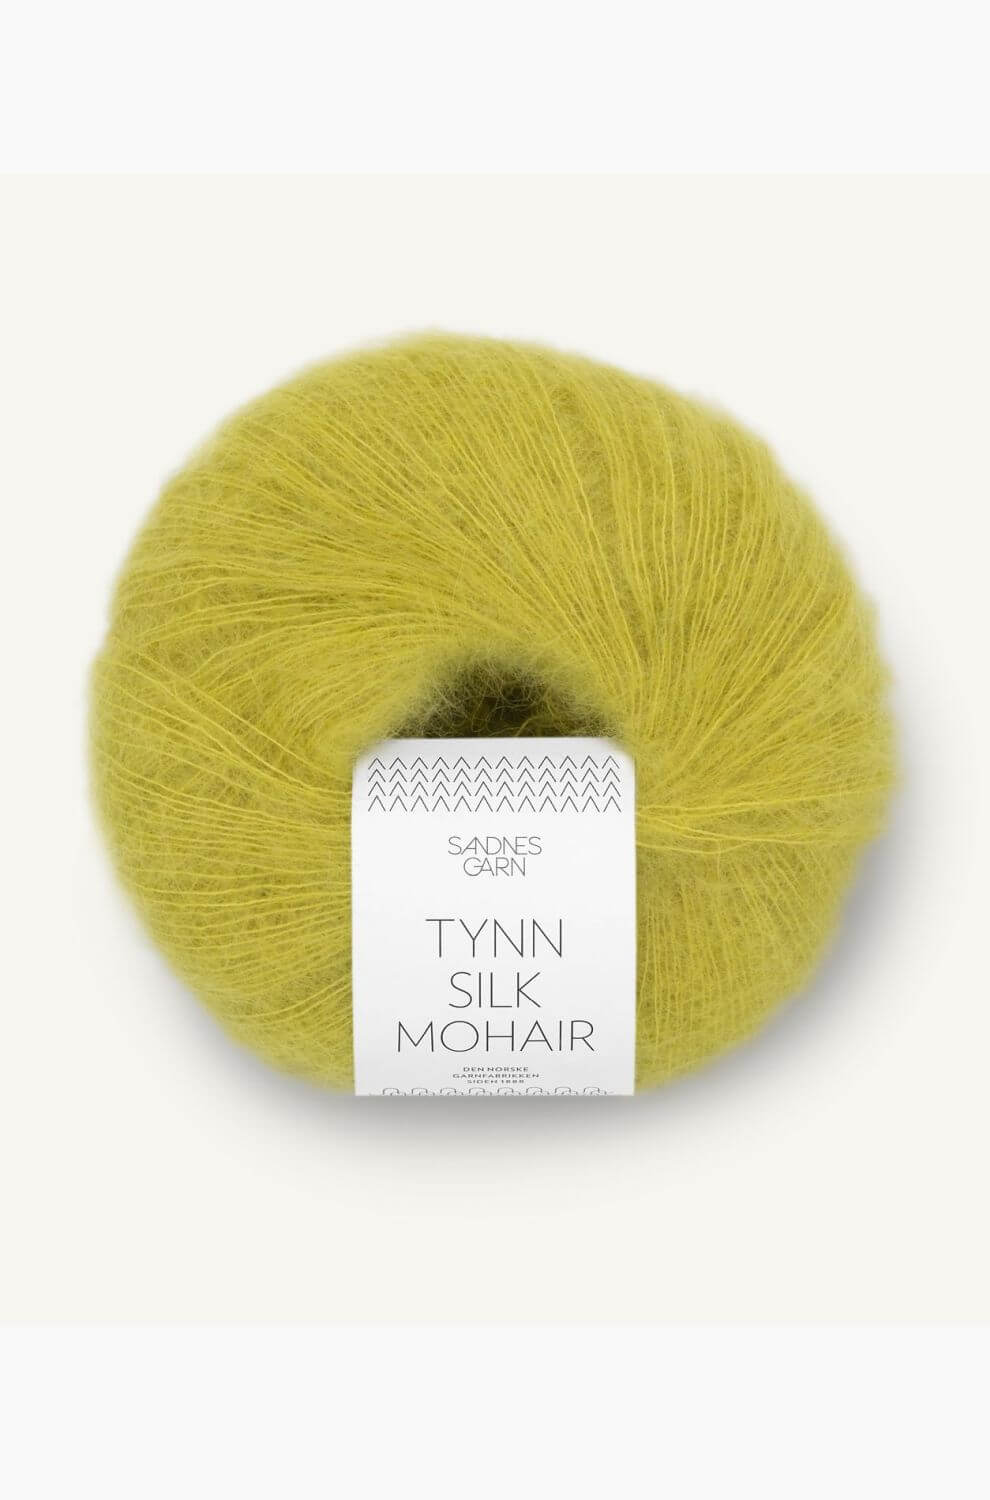 Sandnes Garn Tynn Silk Mohair Yarn - 9825 Sunny Lime at Jimmy Beans Wool